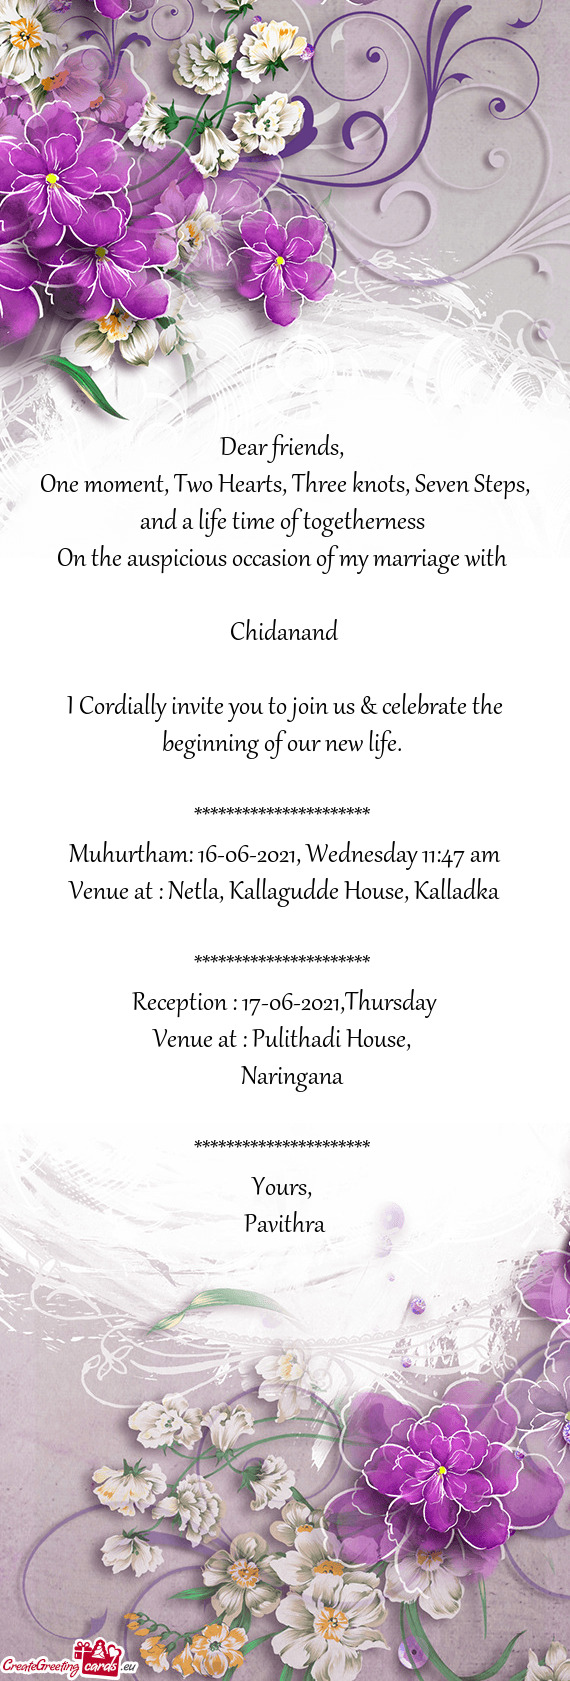 Venue at : Netla, Kallagudde House, Kalladka